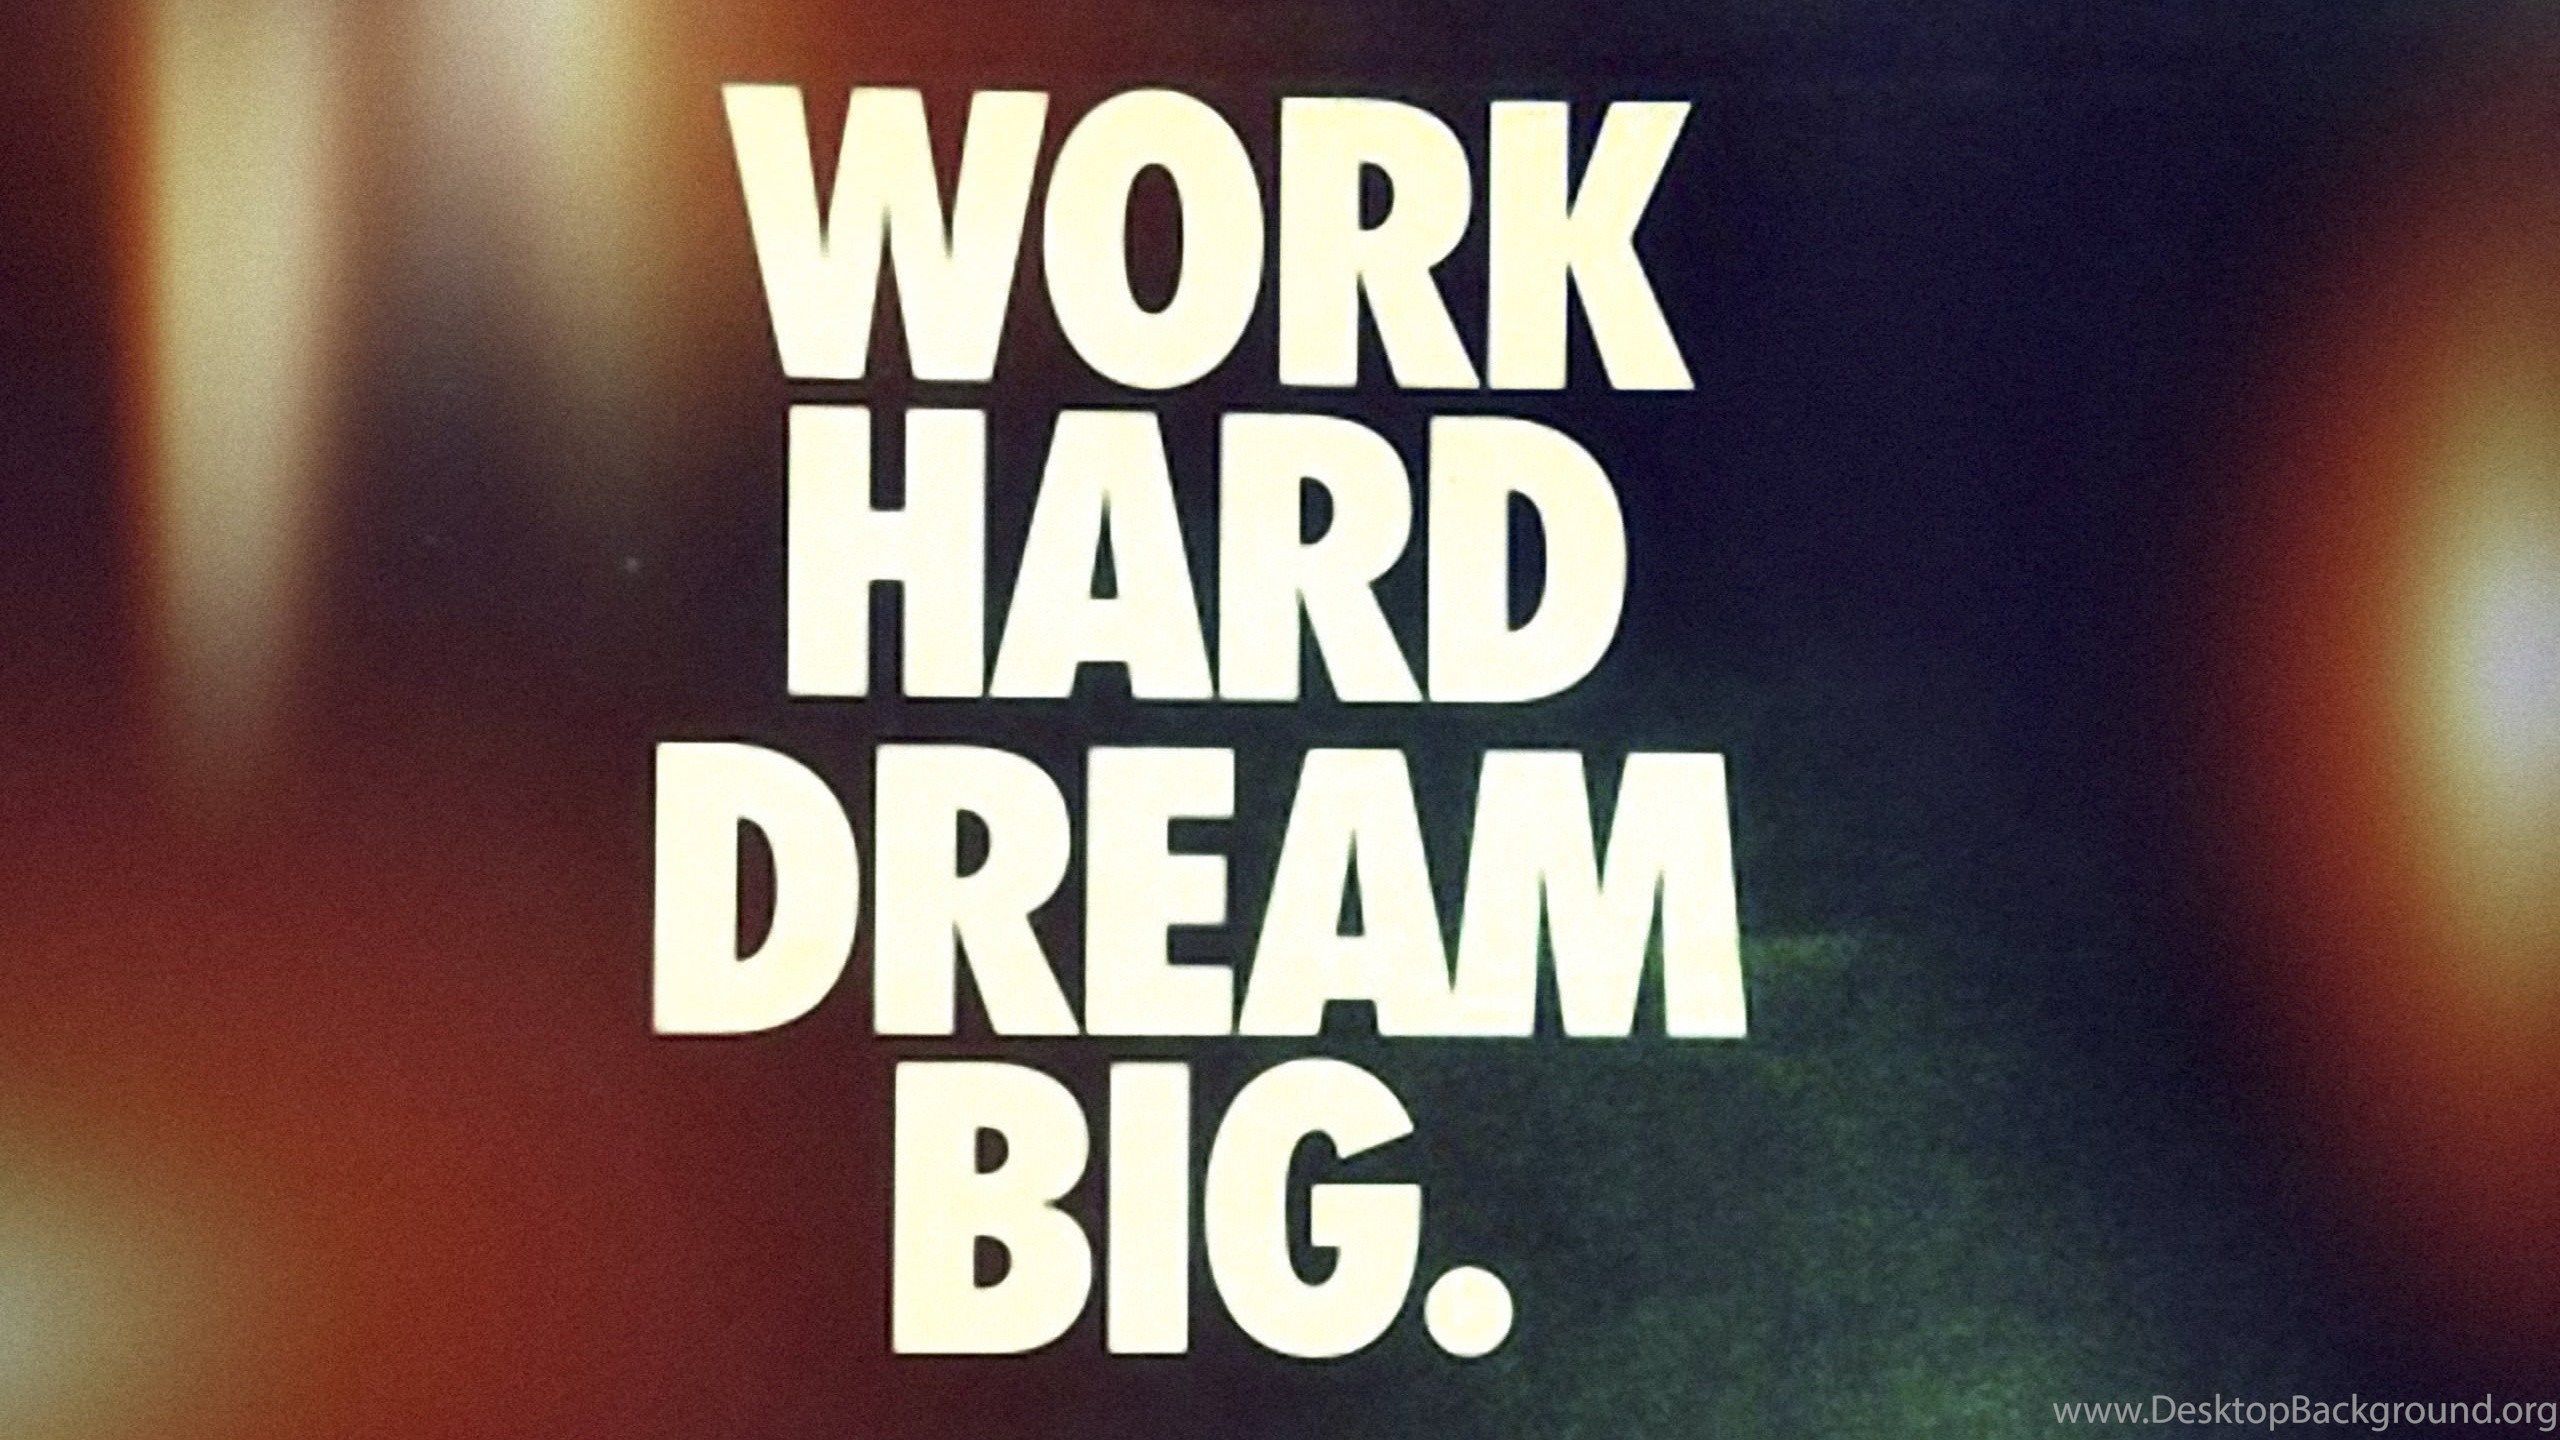 Work Hard Dream Big Motivational Desktop Wallpaper Desktop Background